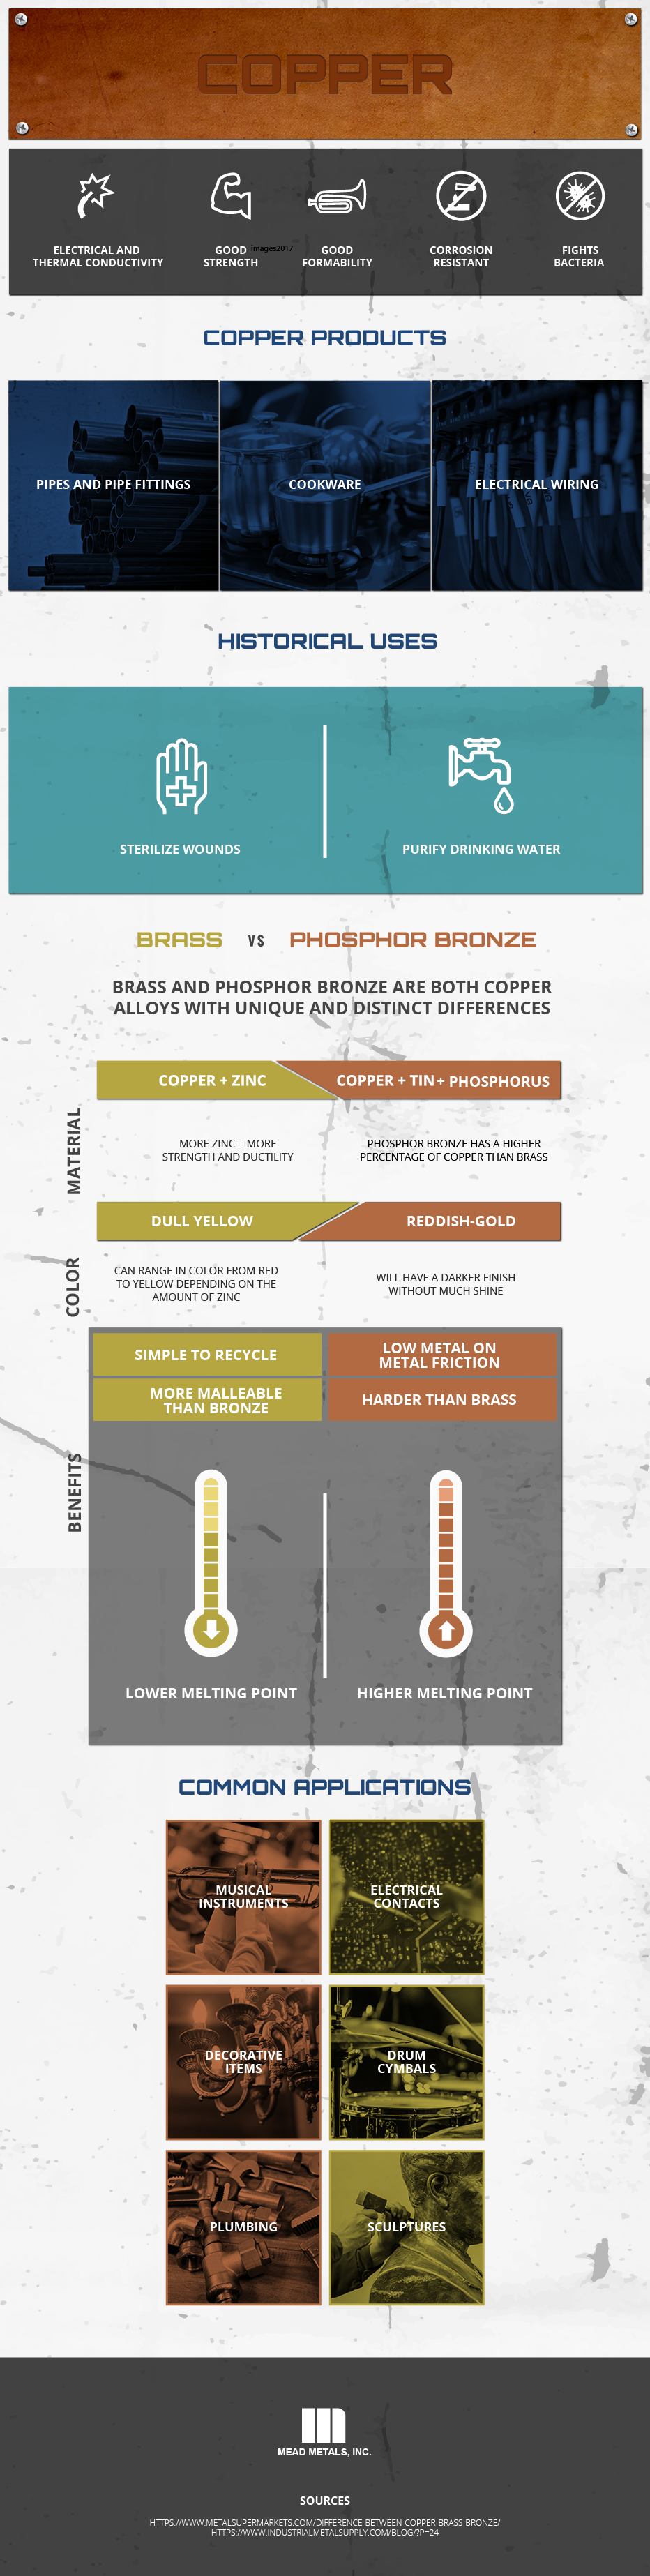 A Guide to Copper Alloys: Brass vs. Phosphor Bronze